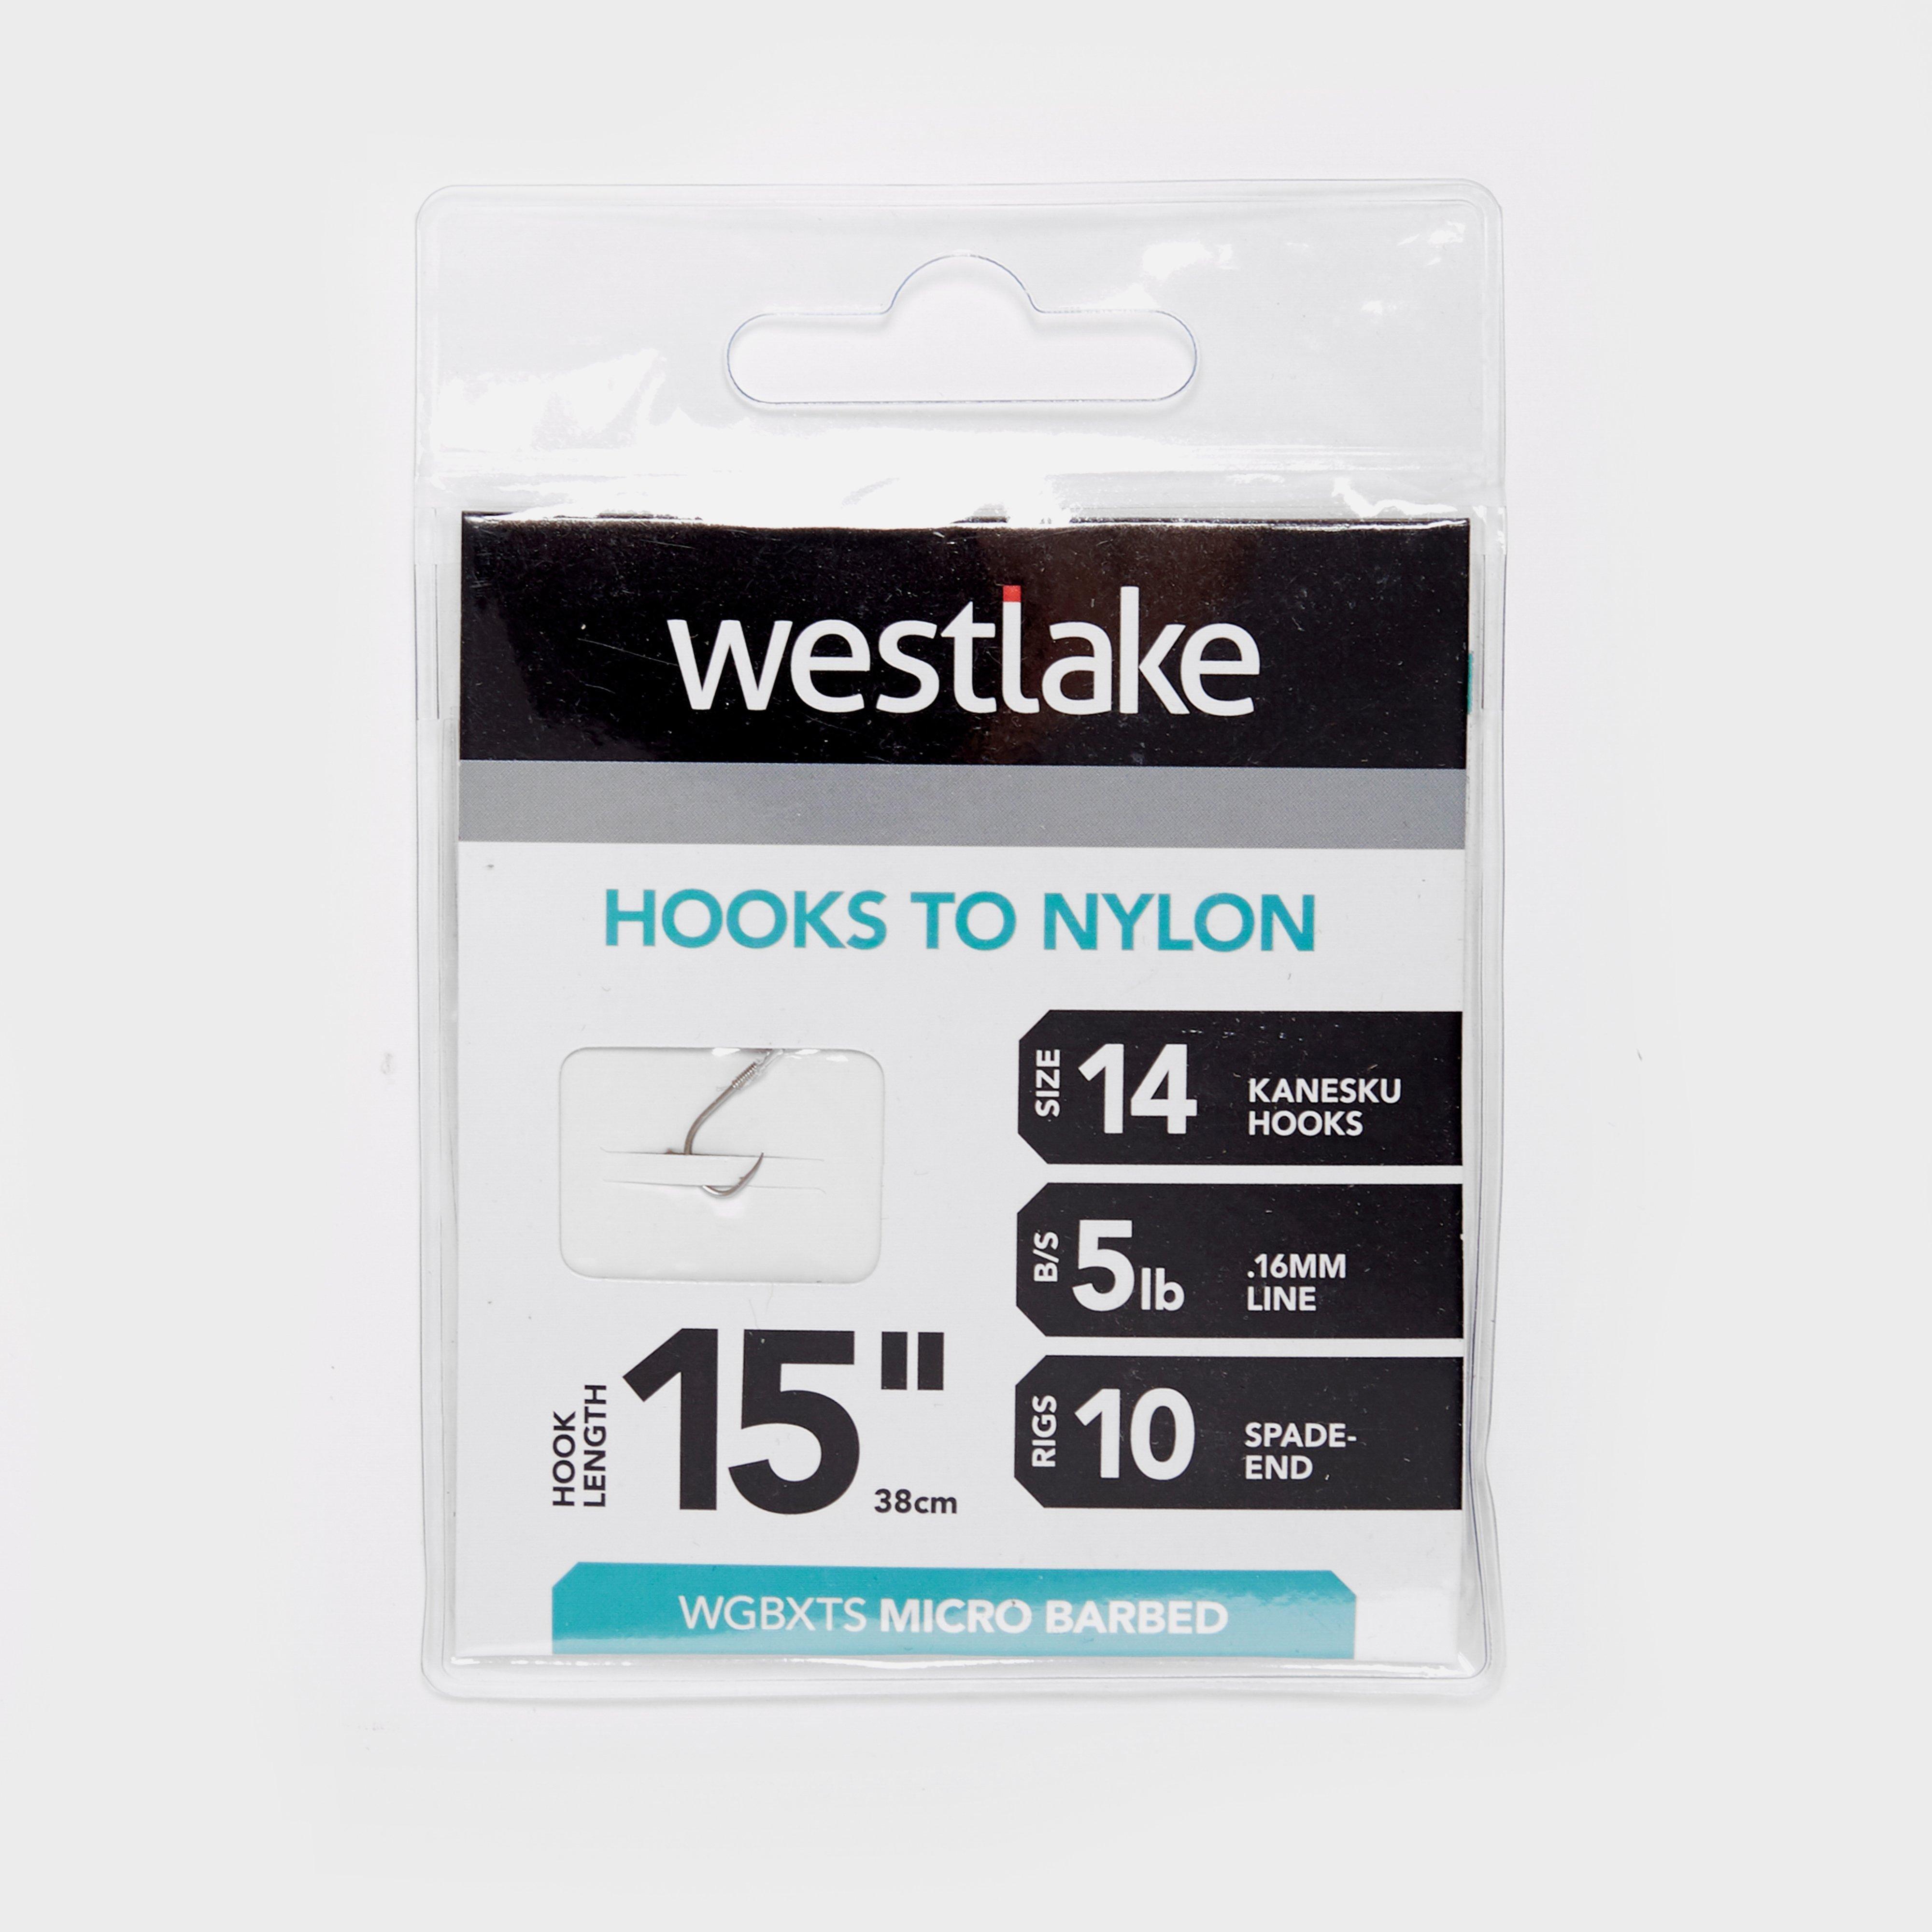 Photos - Bait West Lake Westlake Extra Strong Micro-Barbed Hooks to Nylon , White (Size 14)